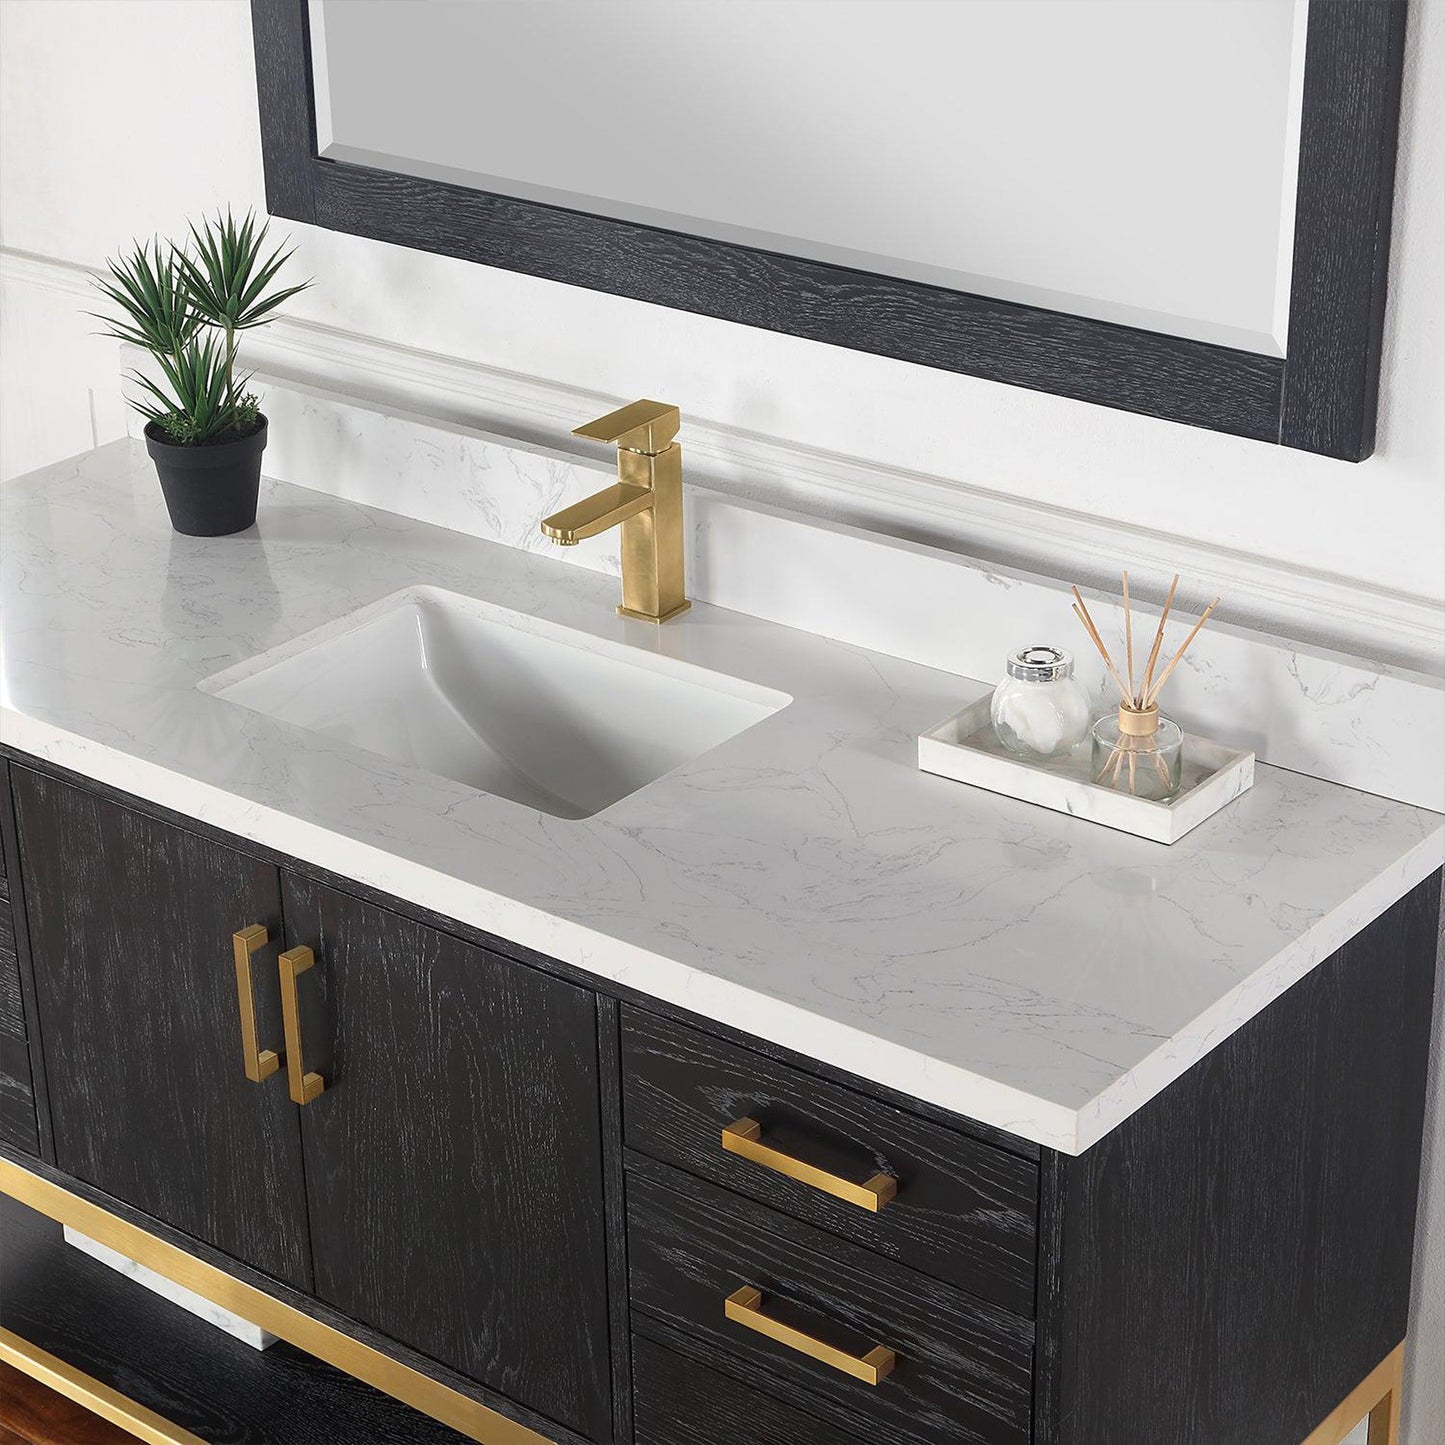 Altair Wildy 60" Black Oak Freestanding Single Bathroom Vanity Set With Mirror, Stylish Composite Grain White Stone Top, Rectangular Undermount Ceramic Sink, Overflow, and Backsplash